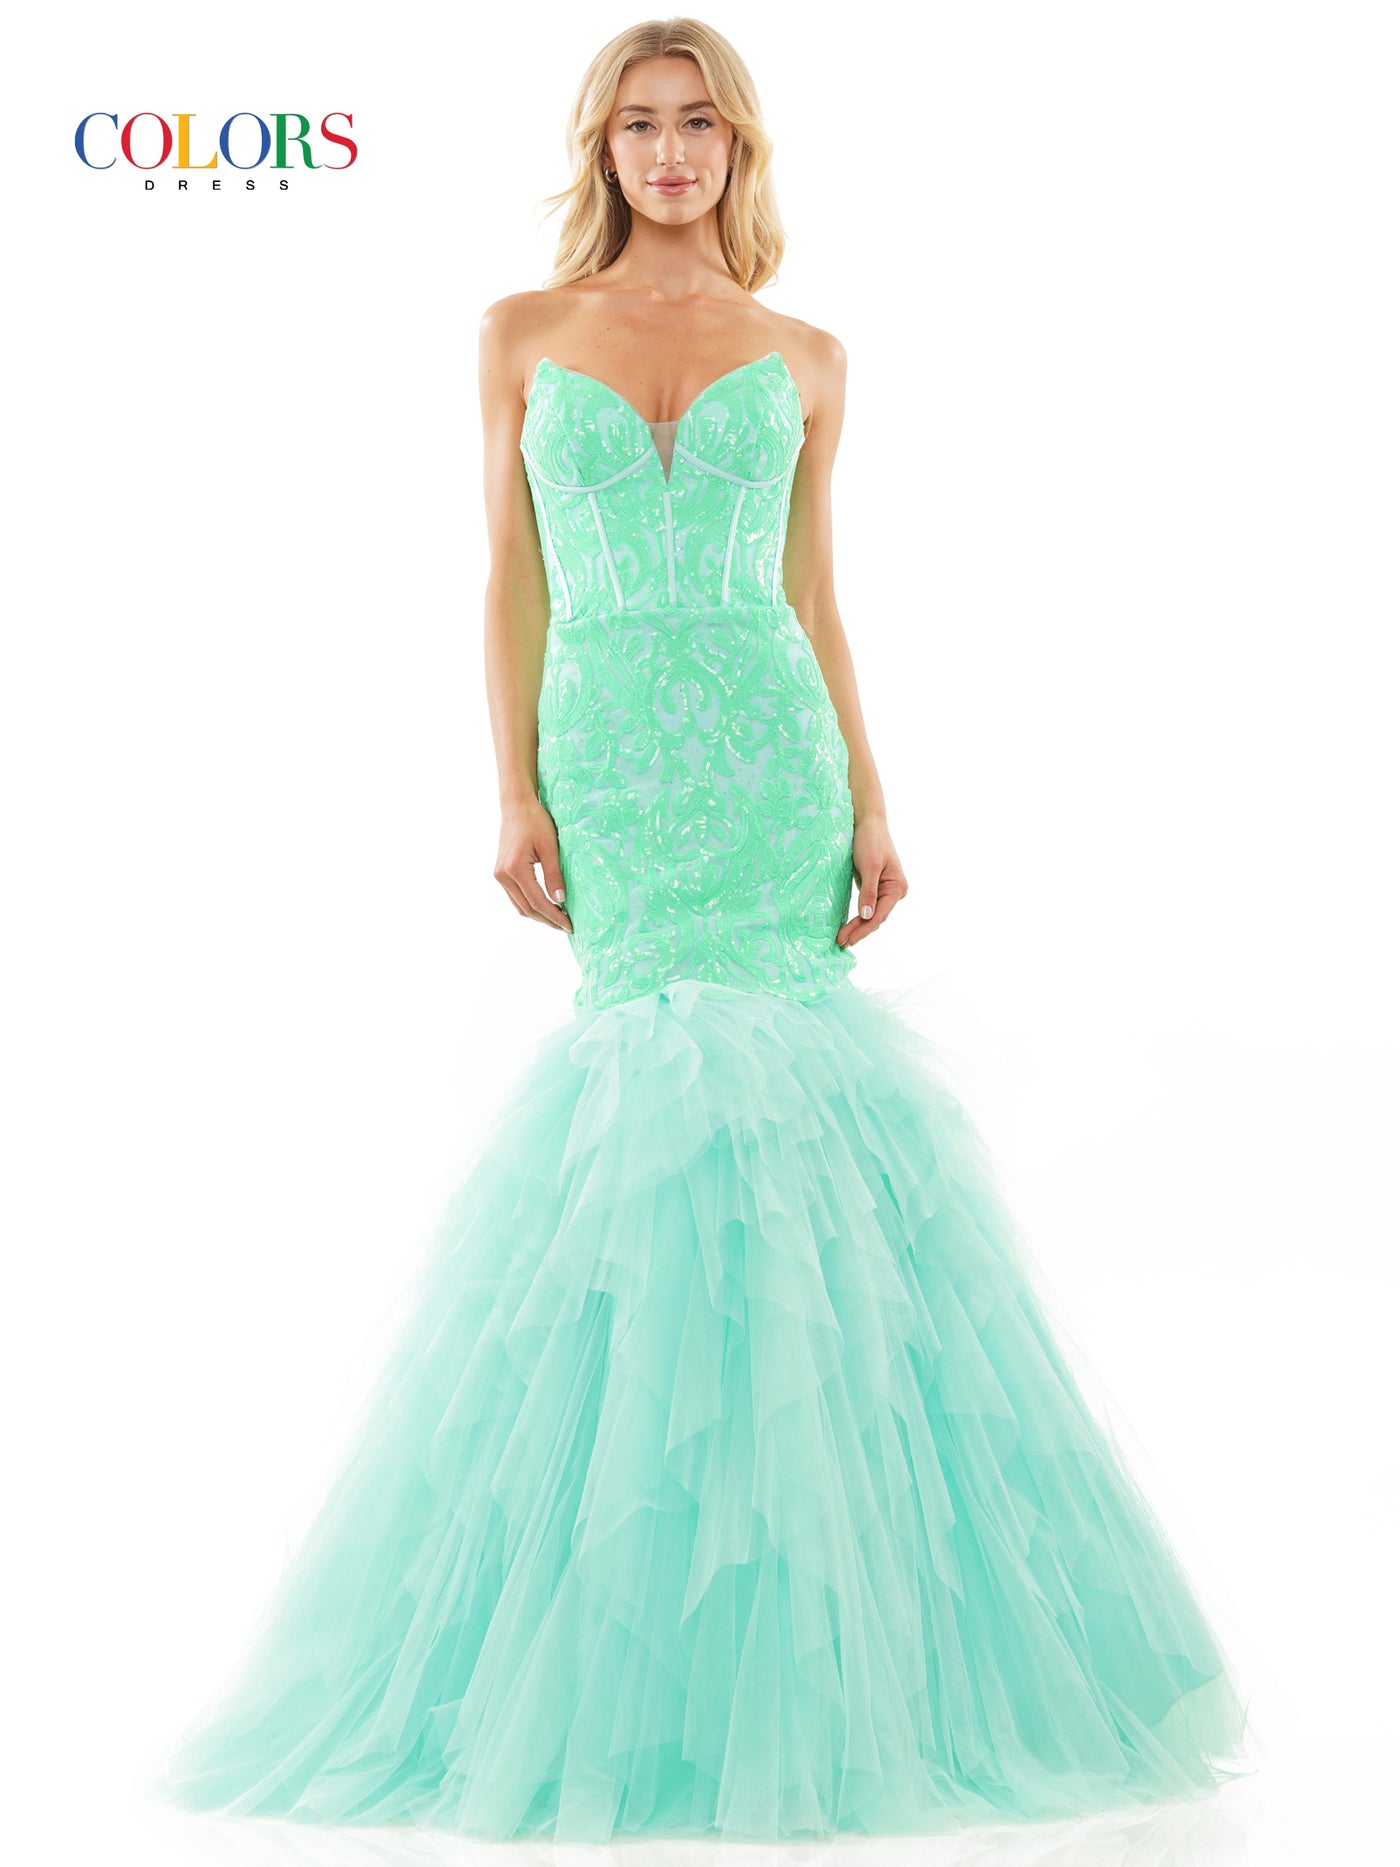 Colors Dress 2985 Light Green Mermaid Prom Dress